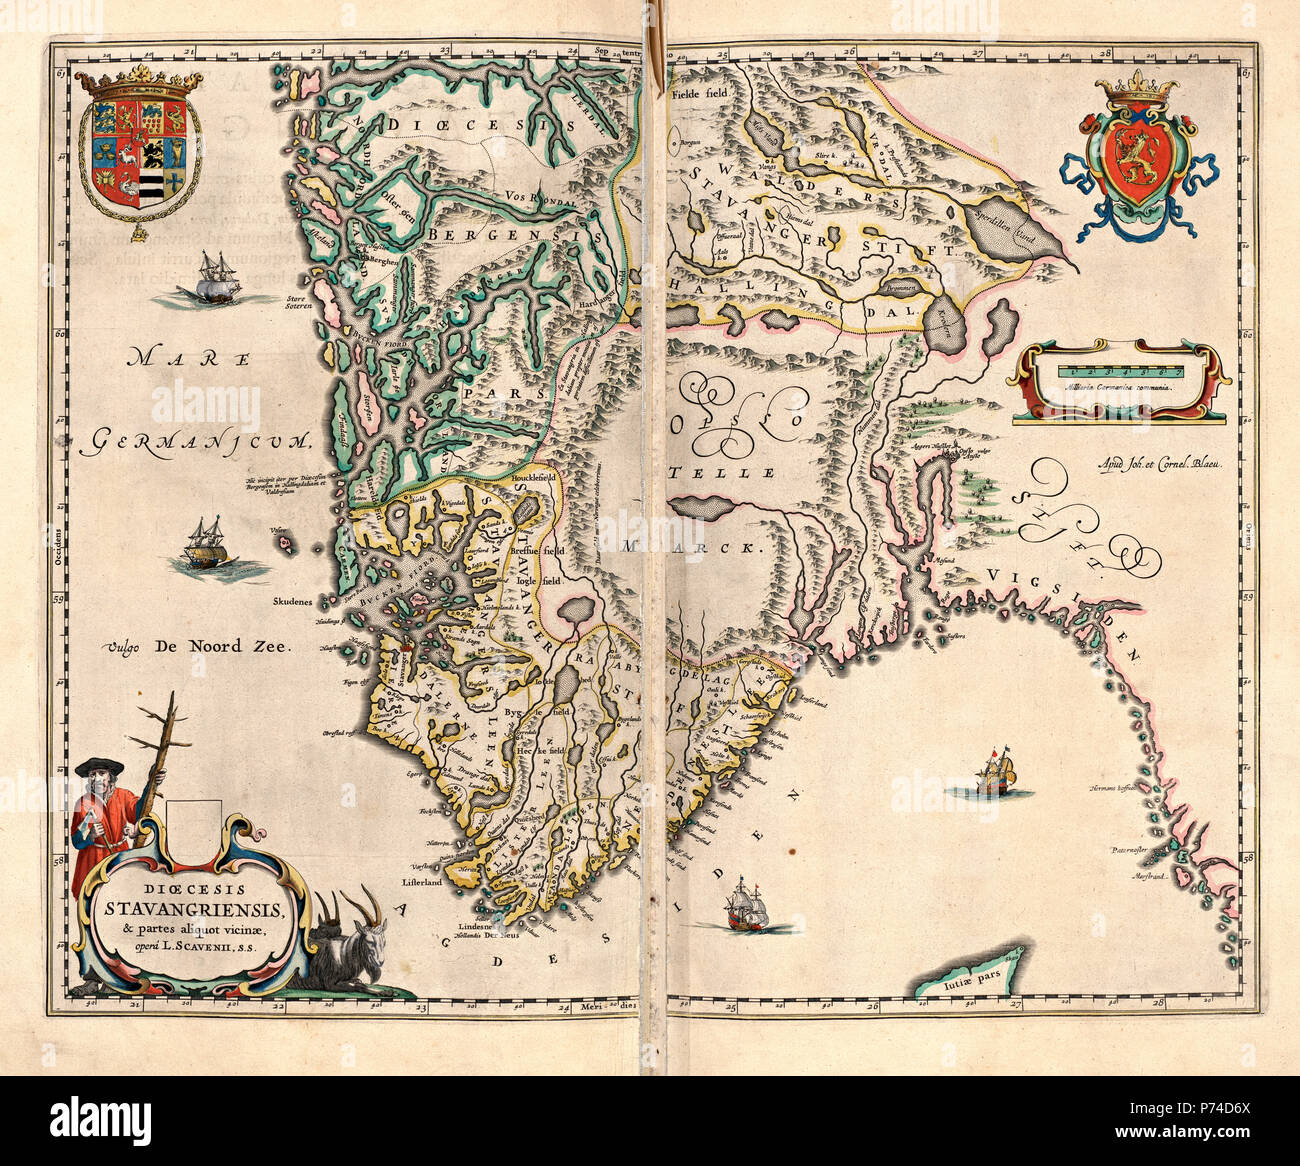 J'Scaveniuskartet Blaeus Atlas Maior, 1662 Banque D'Images